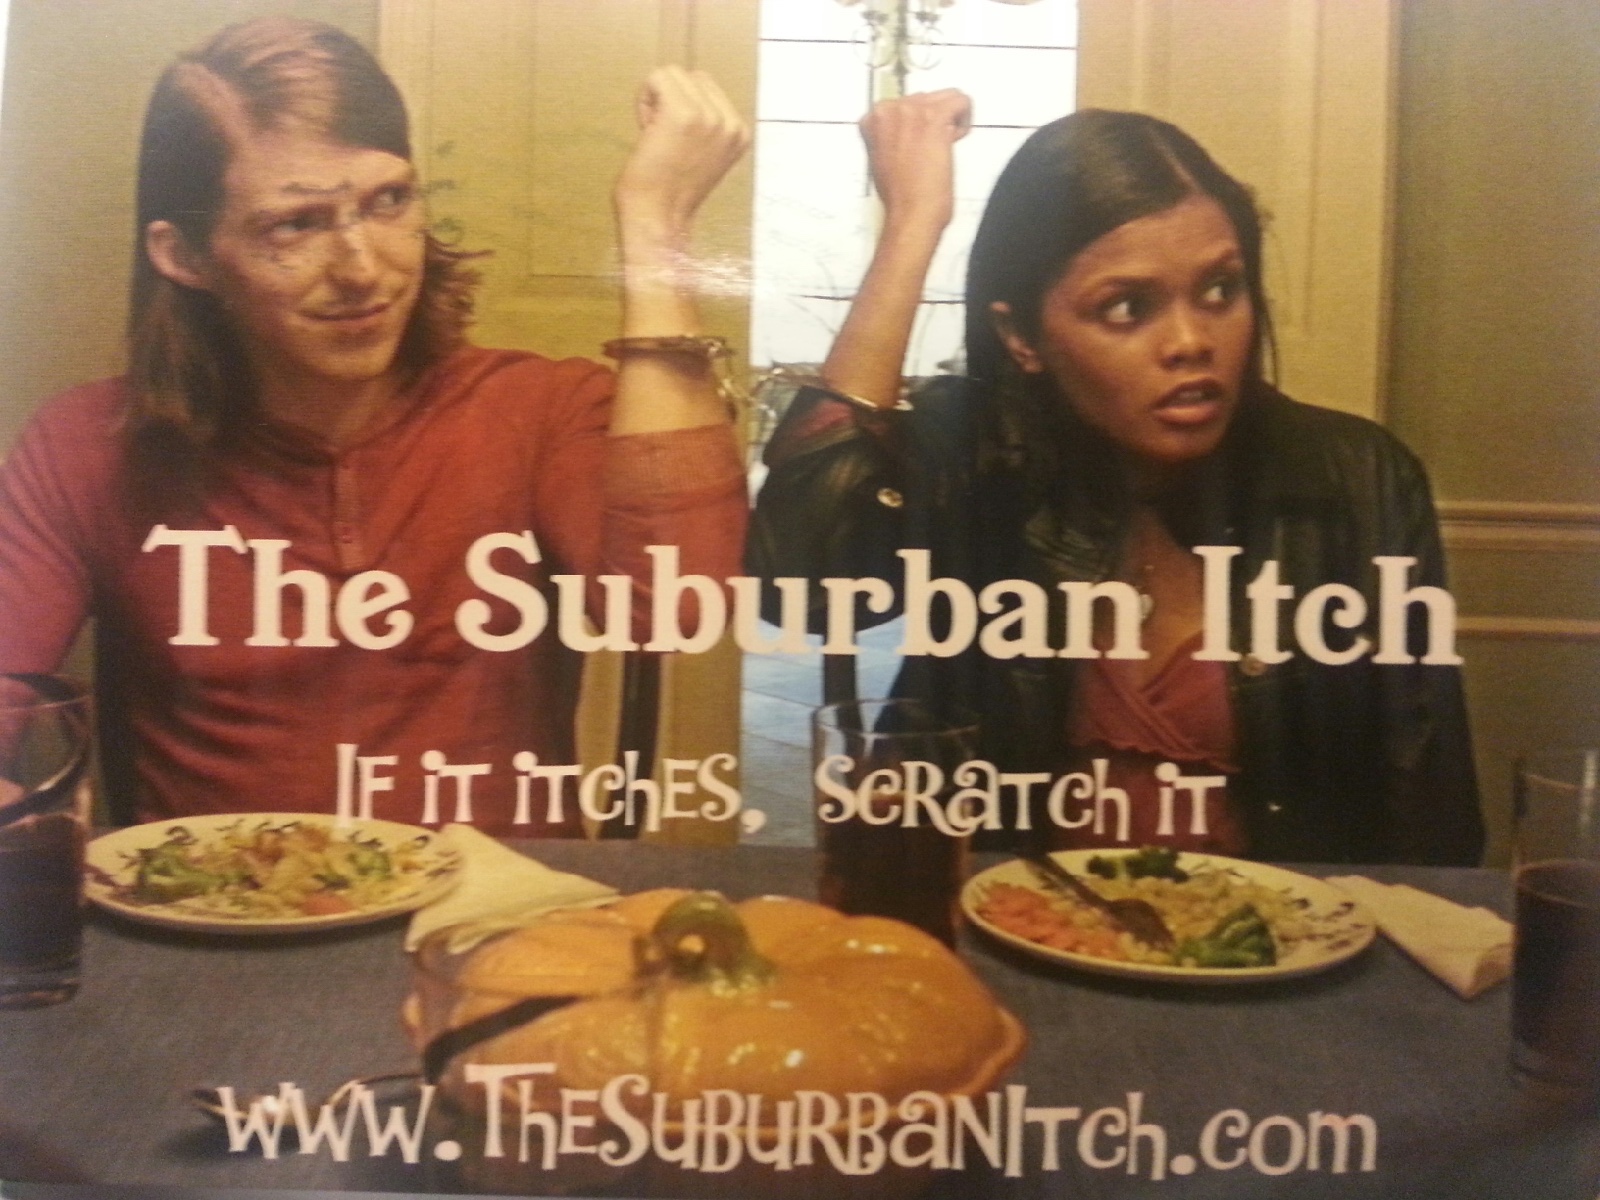 The Suburban Itch Promo